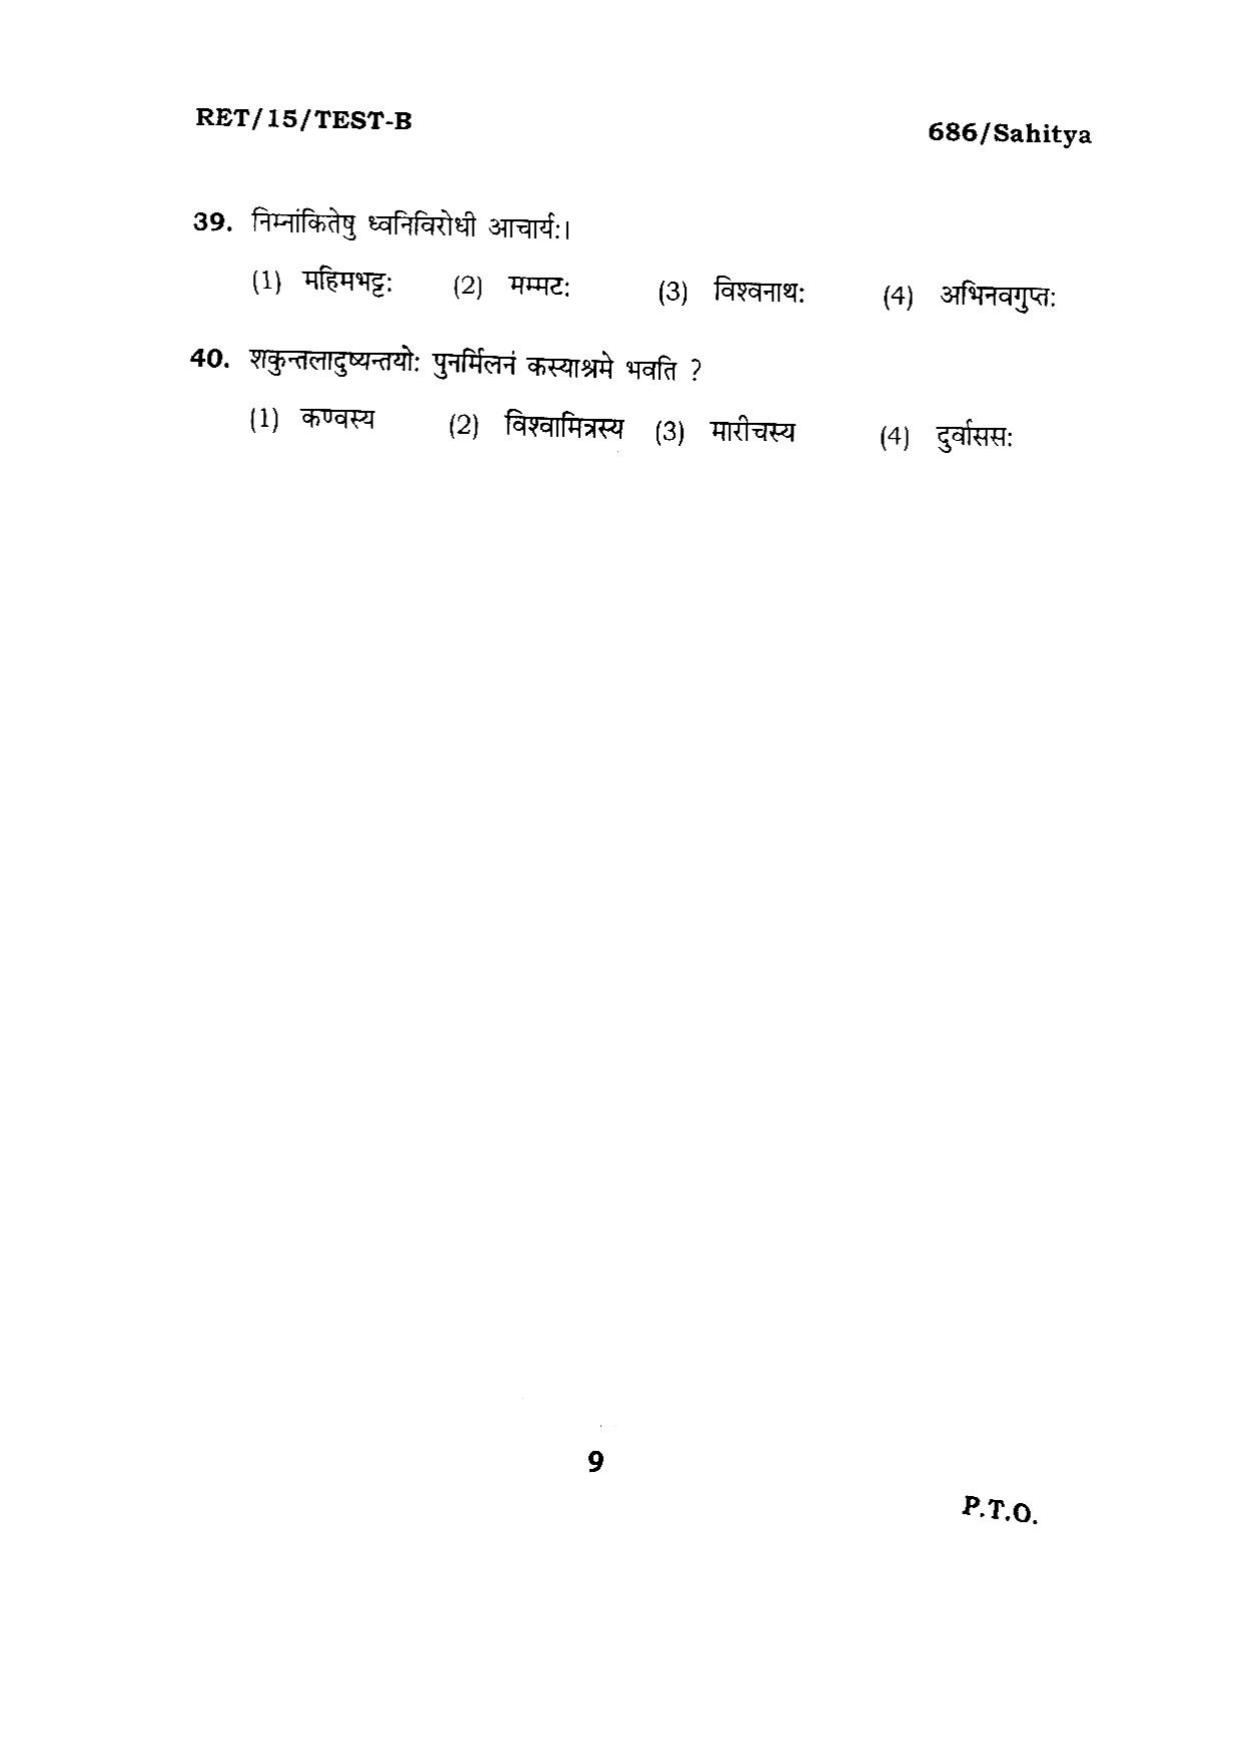 BHU RET SAHITYA 2015 Question Paper - Page 9